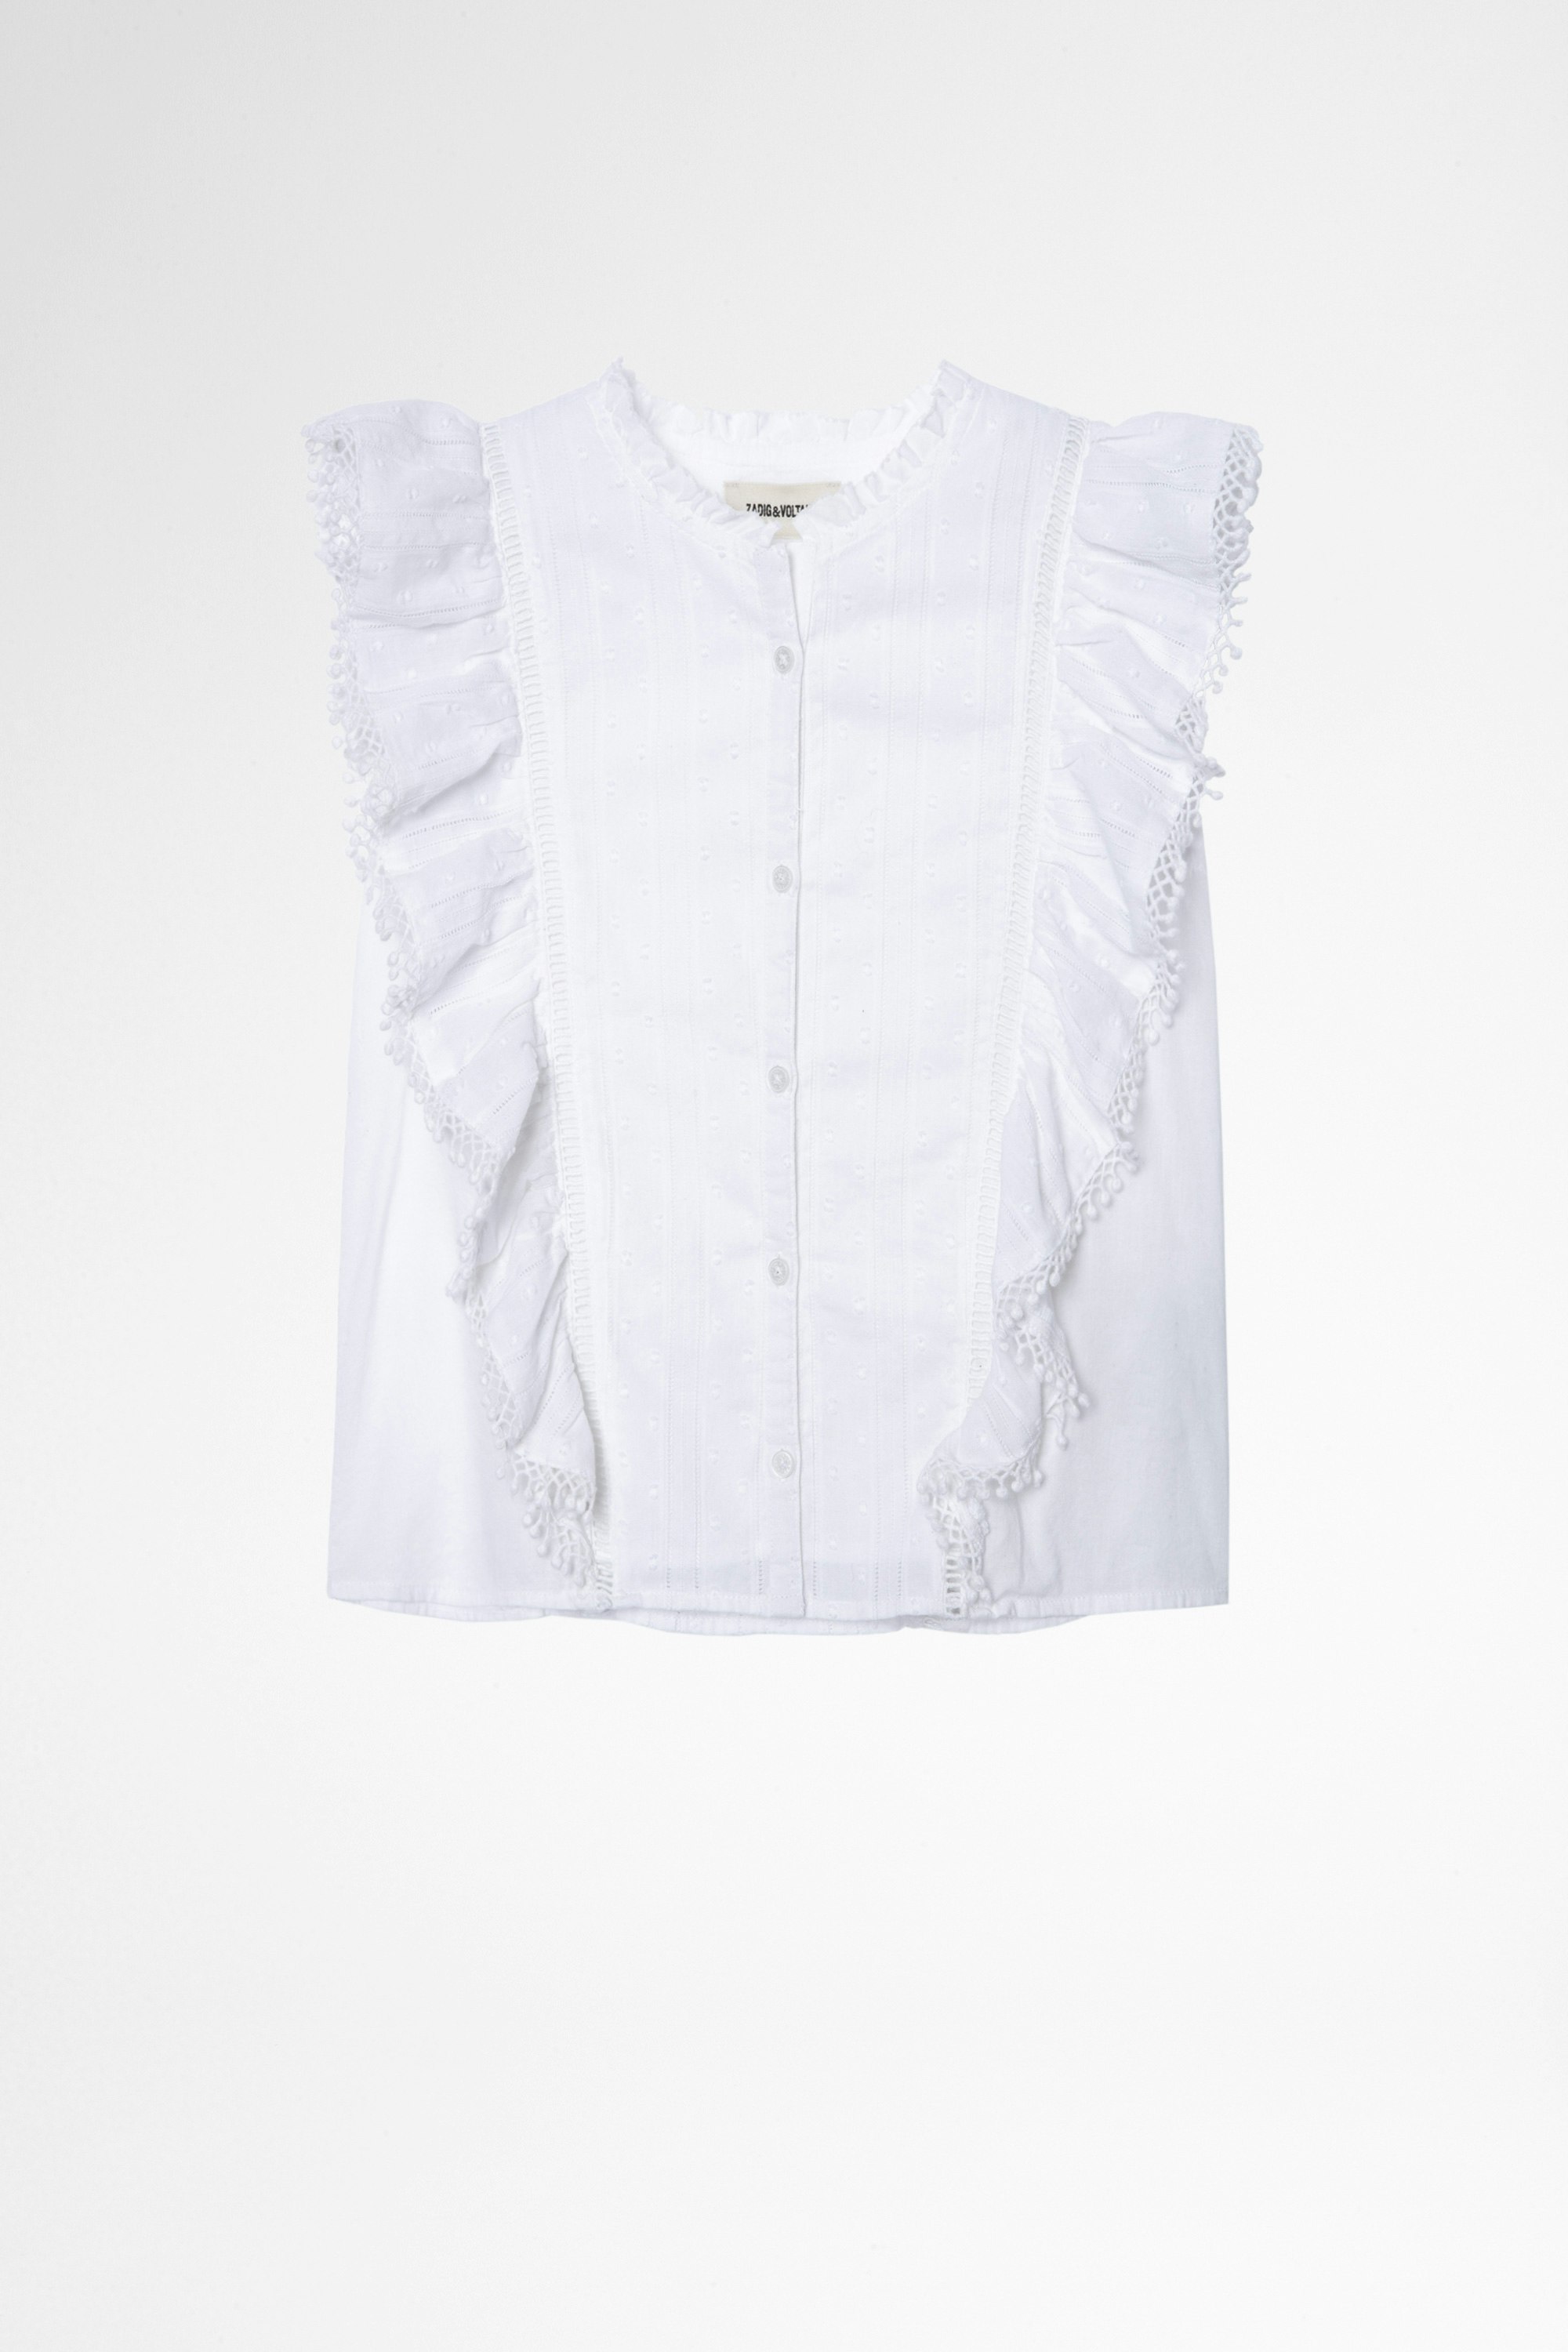 Gisele Children's Blouse Children's cotton top in white